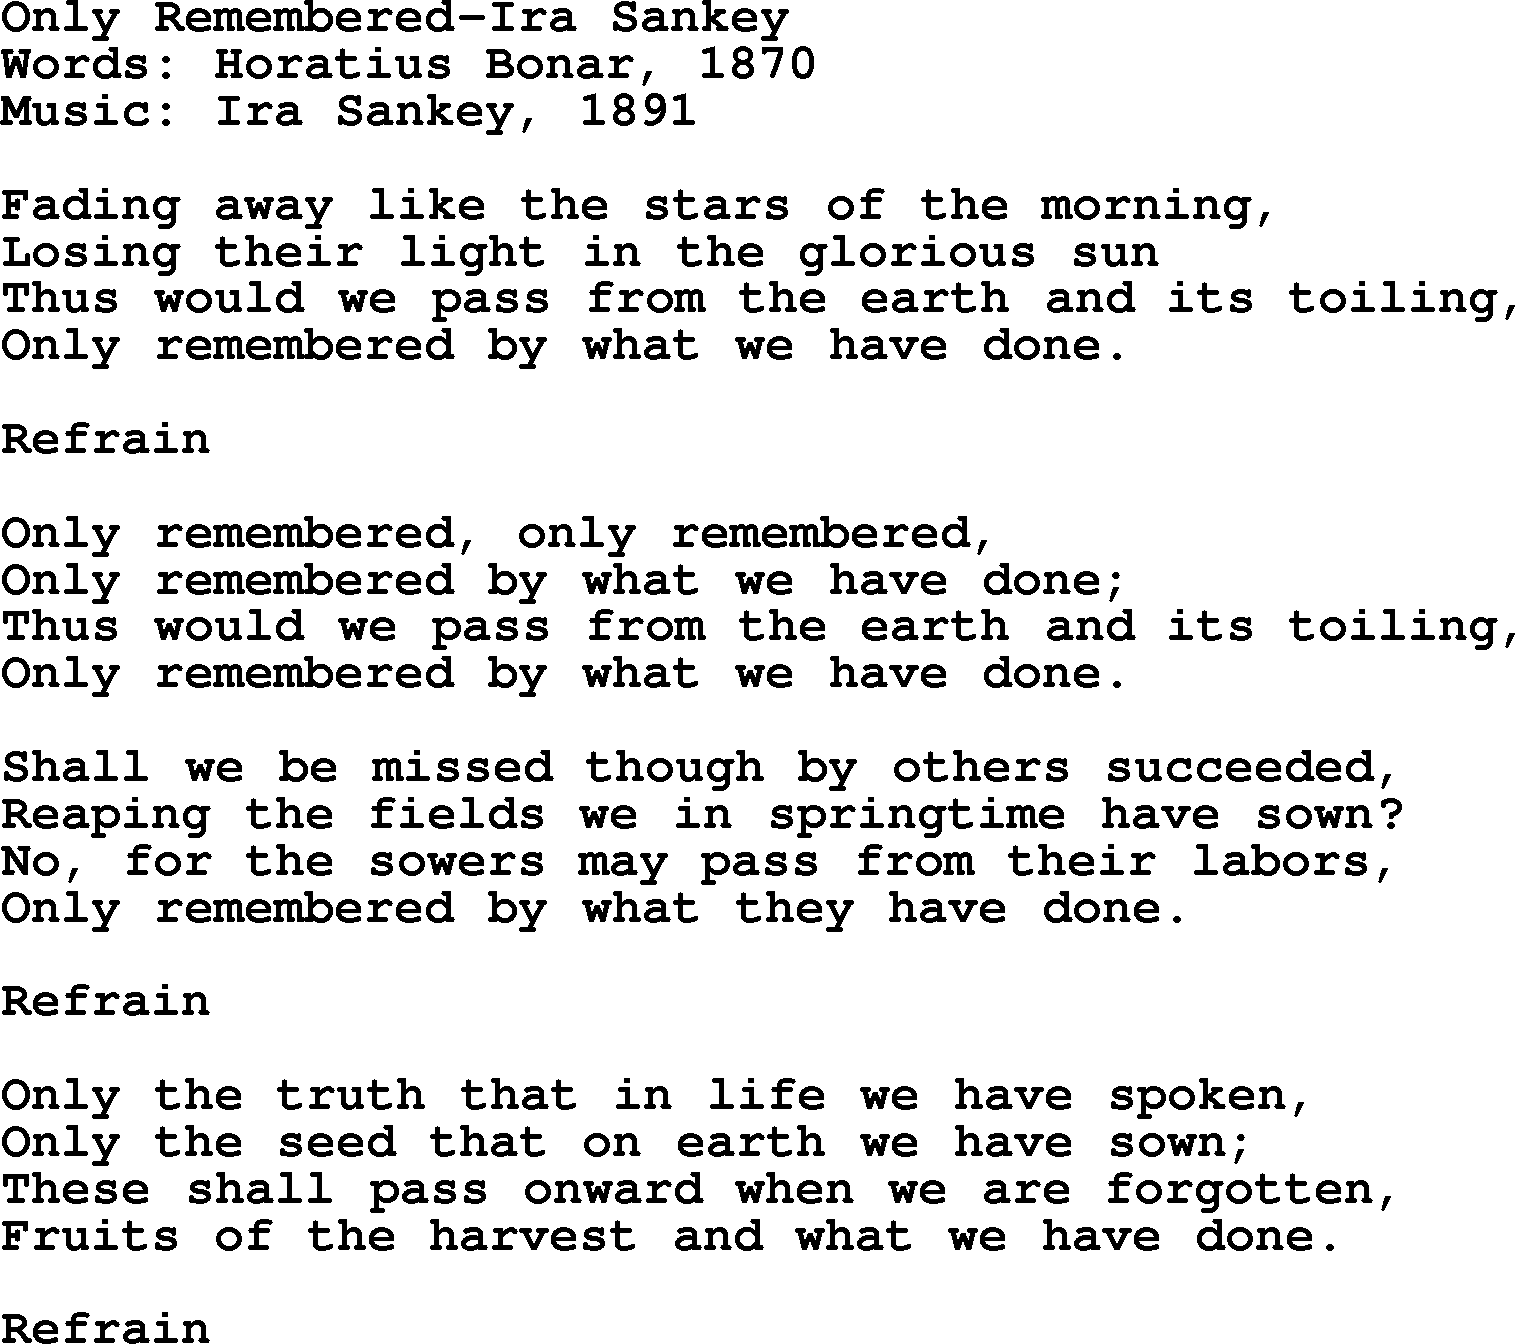 Ira Sankey hymn: Only Remembered-Ira Sankey, lyrics